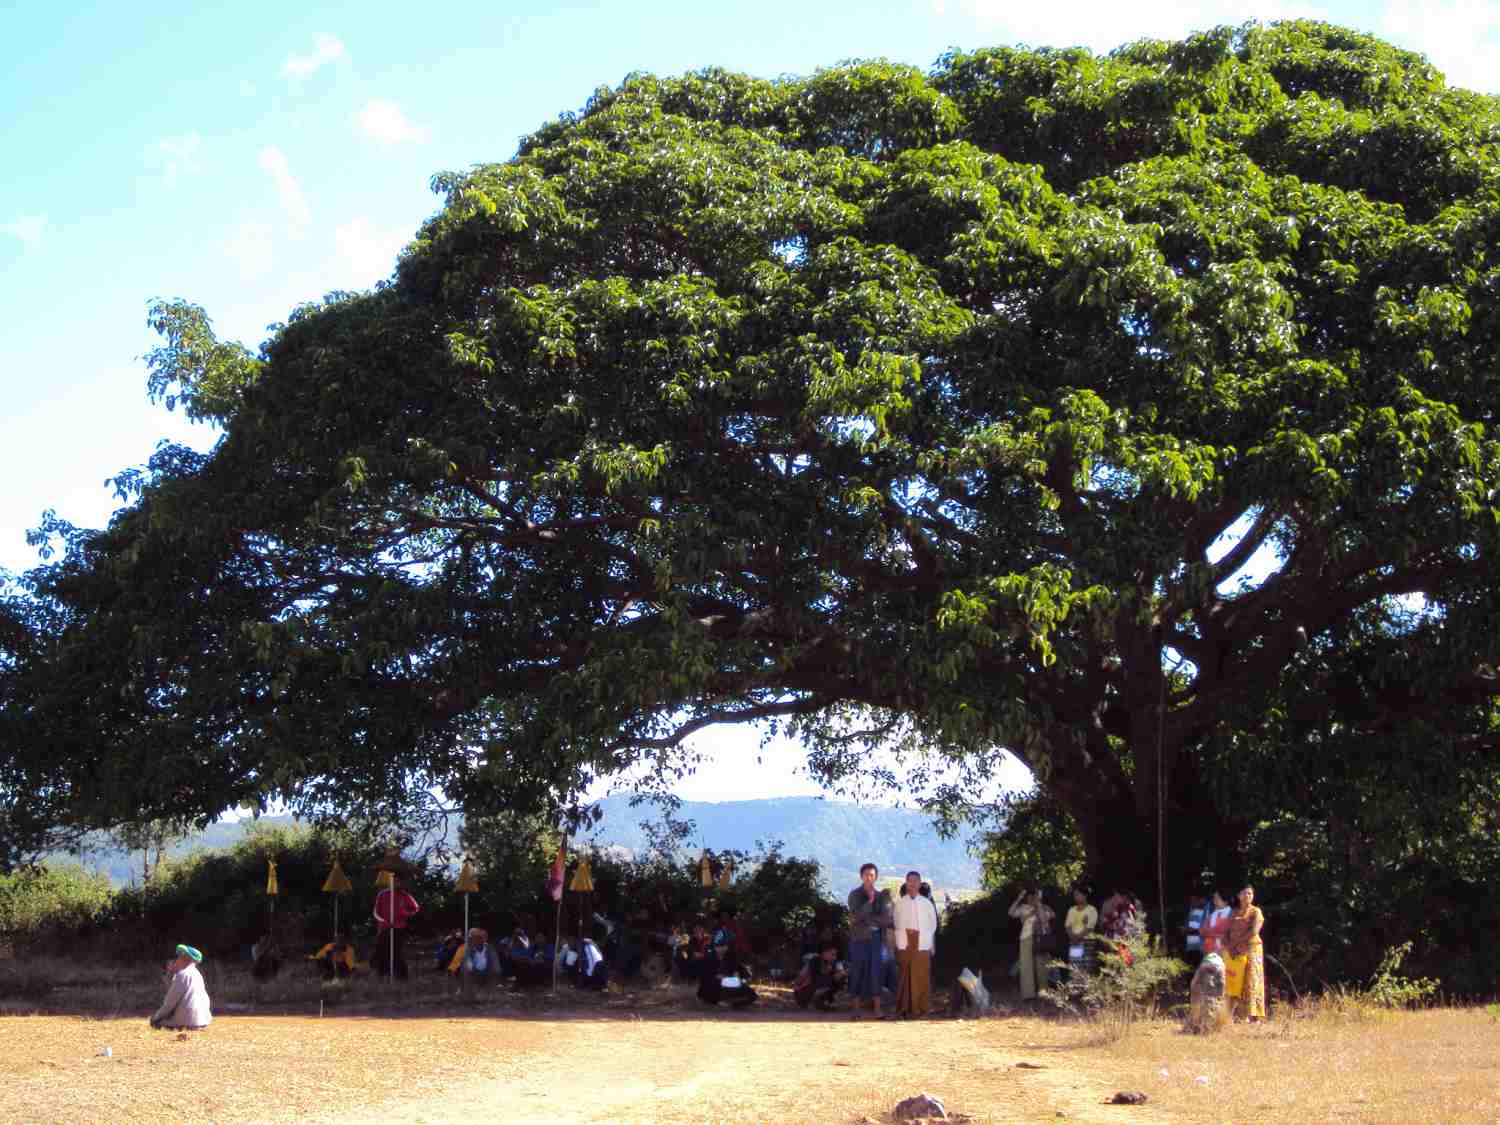 gathering of the believers below tree shade